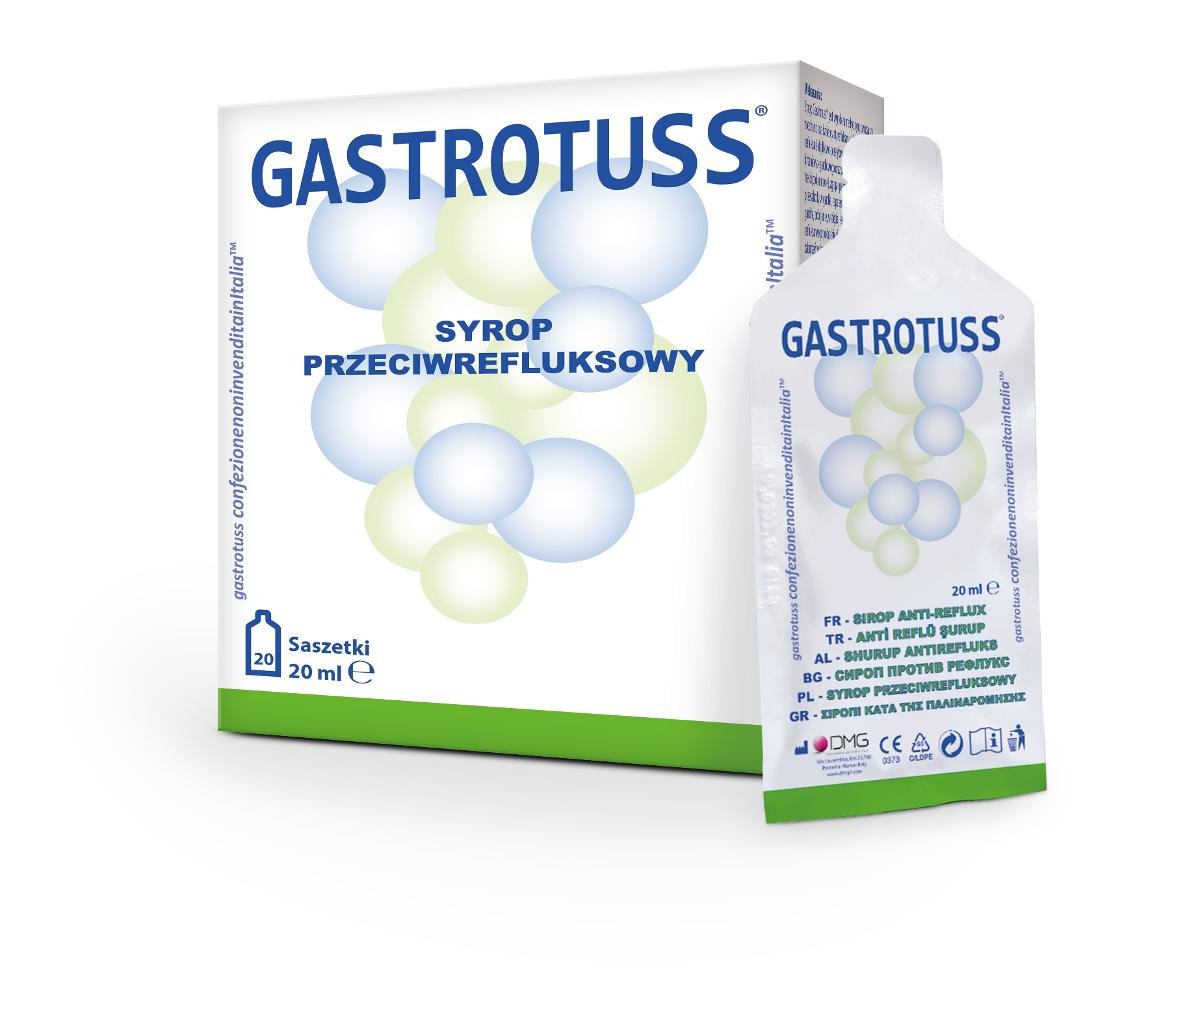 Vitamed Gastrotuss syrop przeciwrefluksowy 20 saszetek po 20 ml 9099349